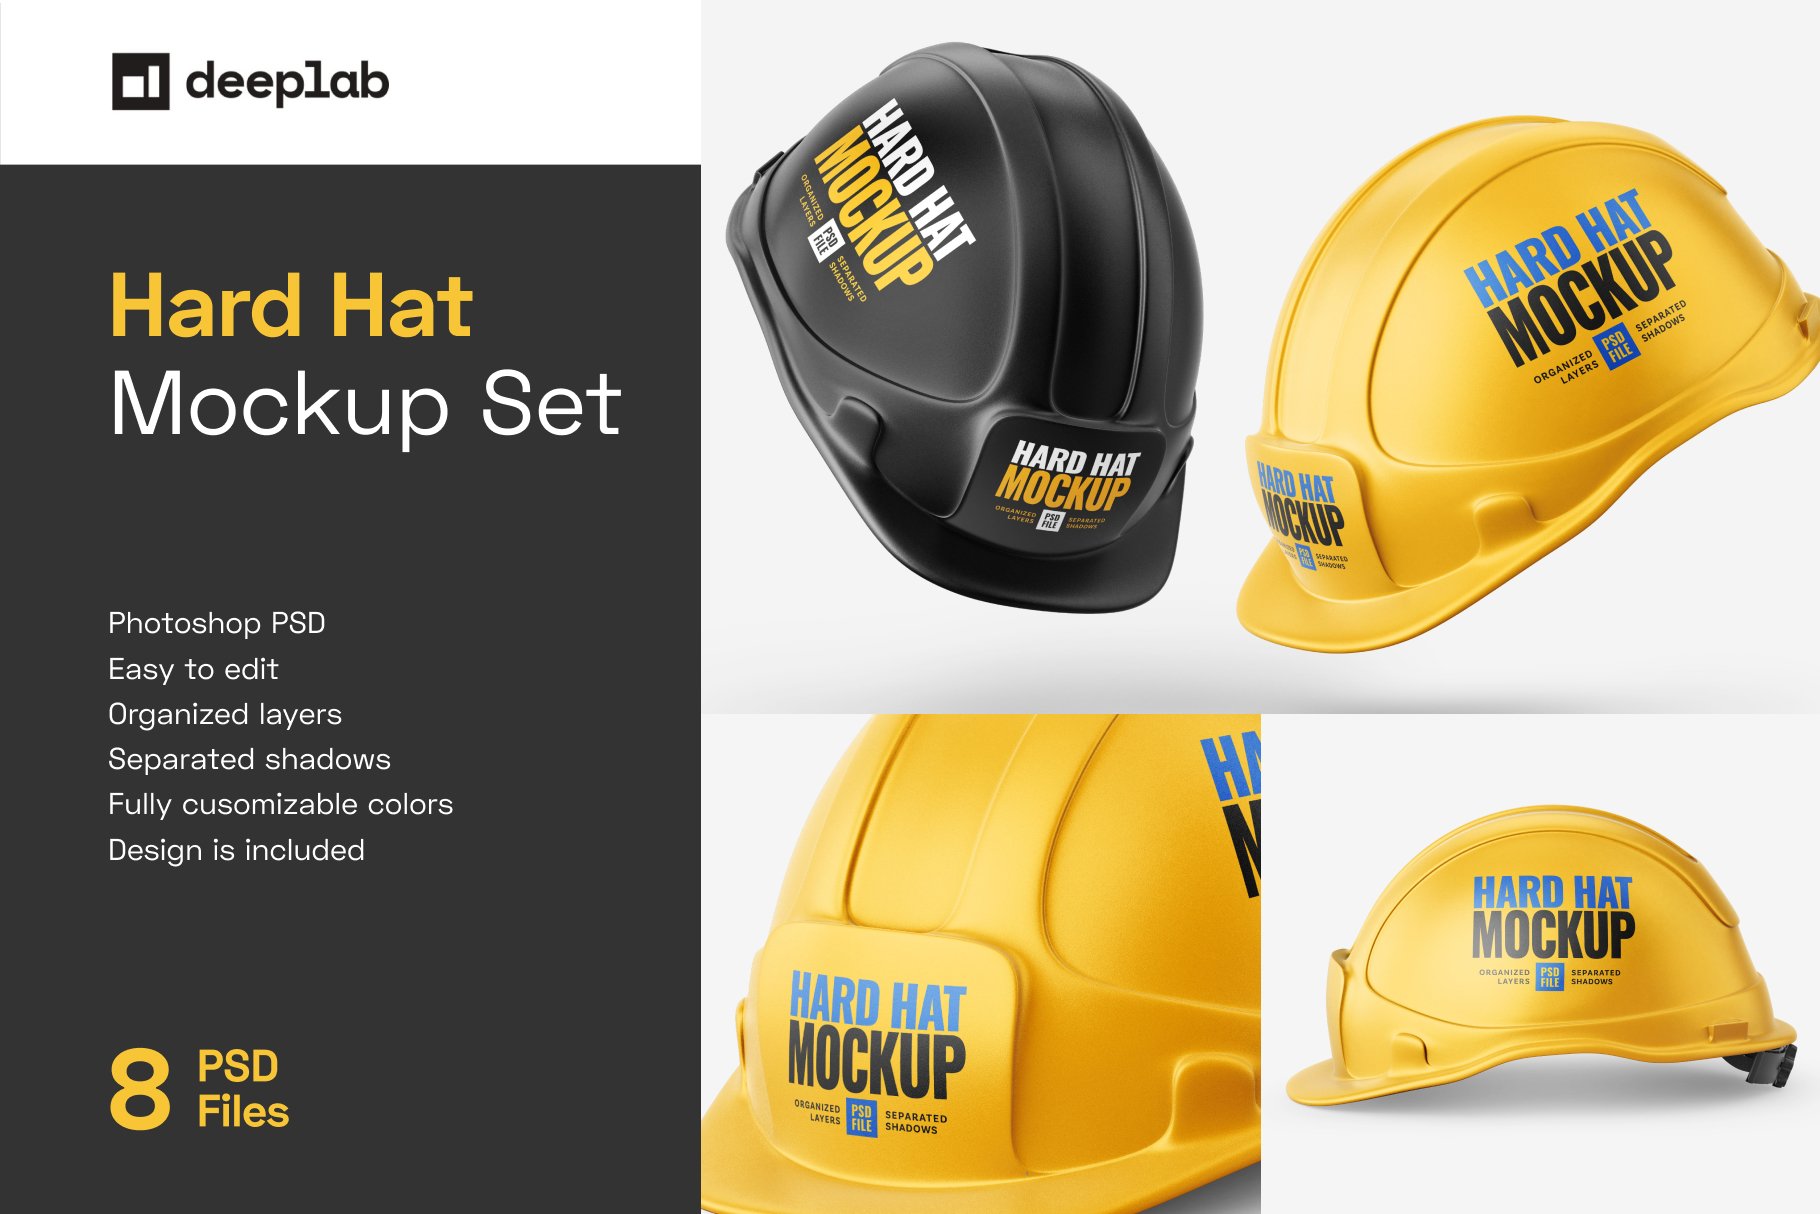 Construction Hard Hat Mockup Set cover image.